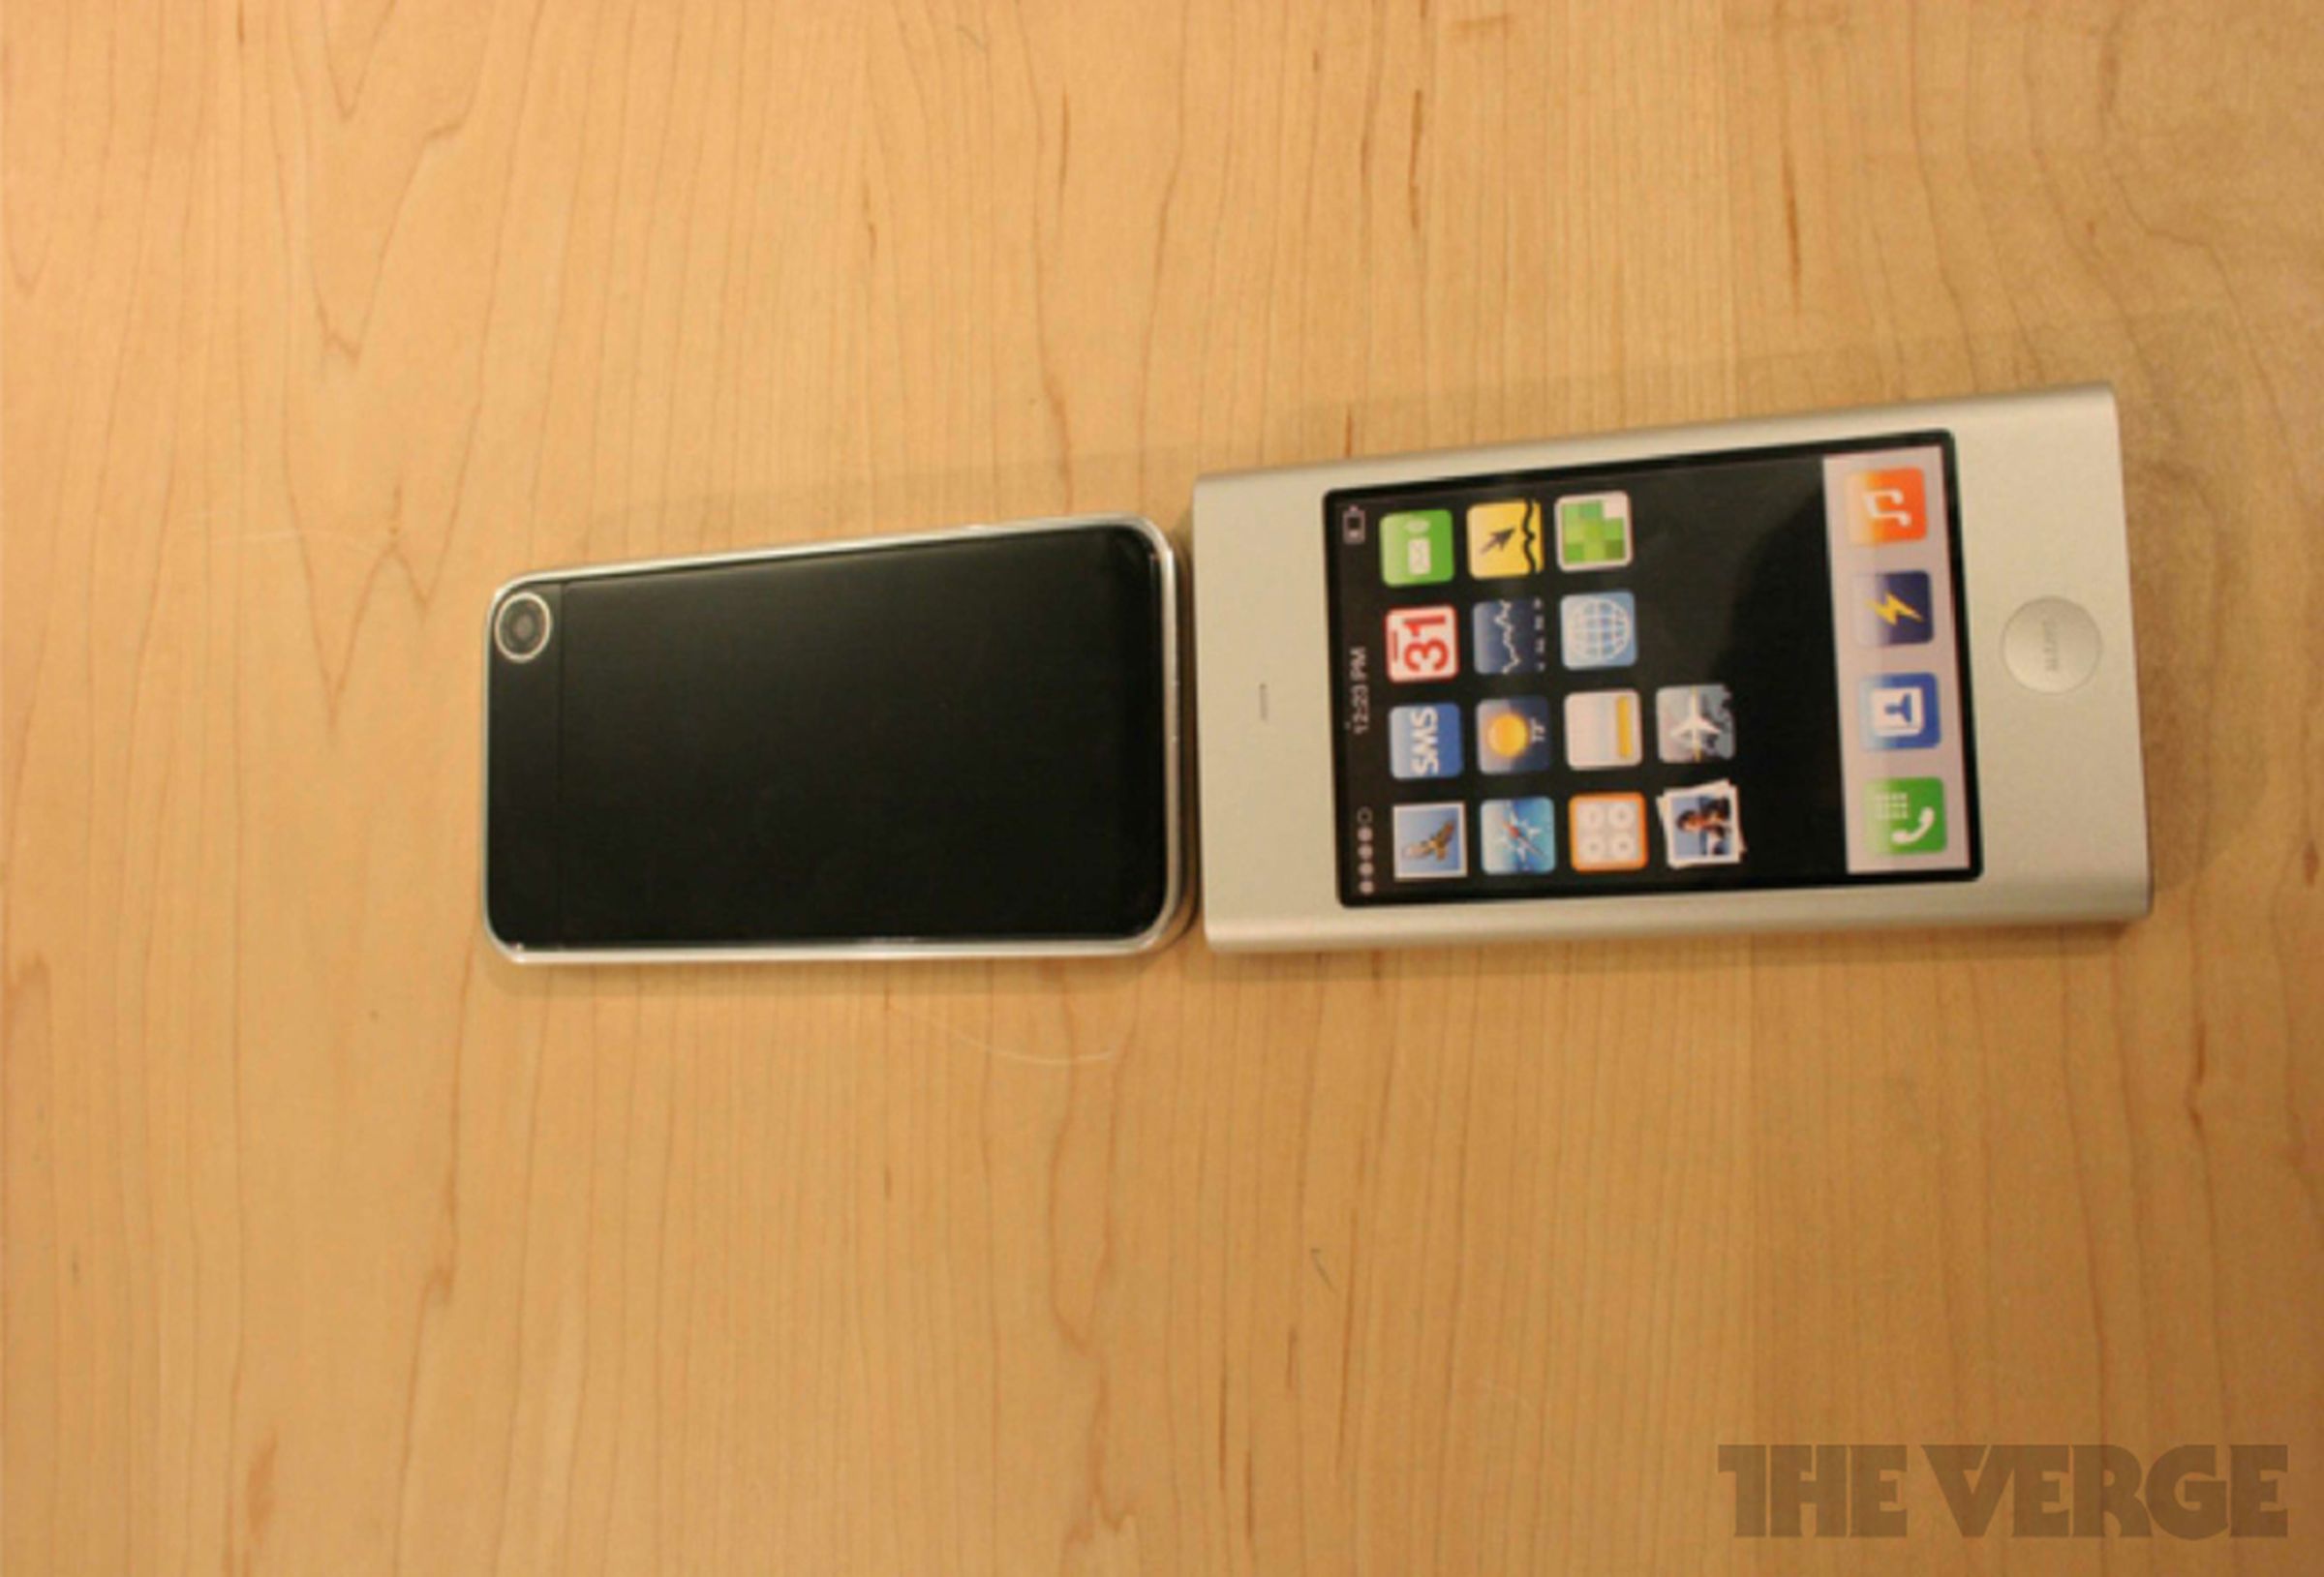 2006 iPhone prototype images